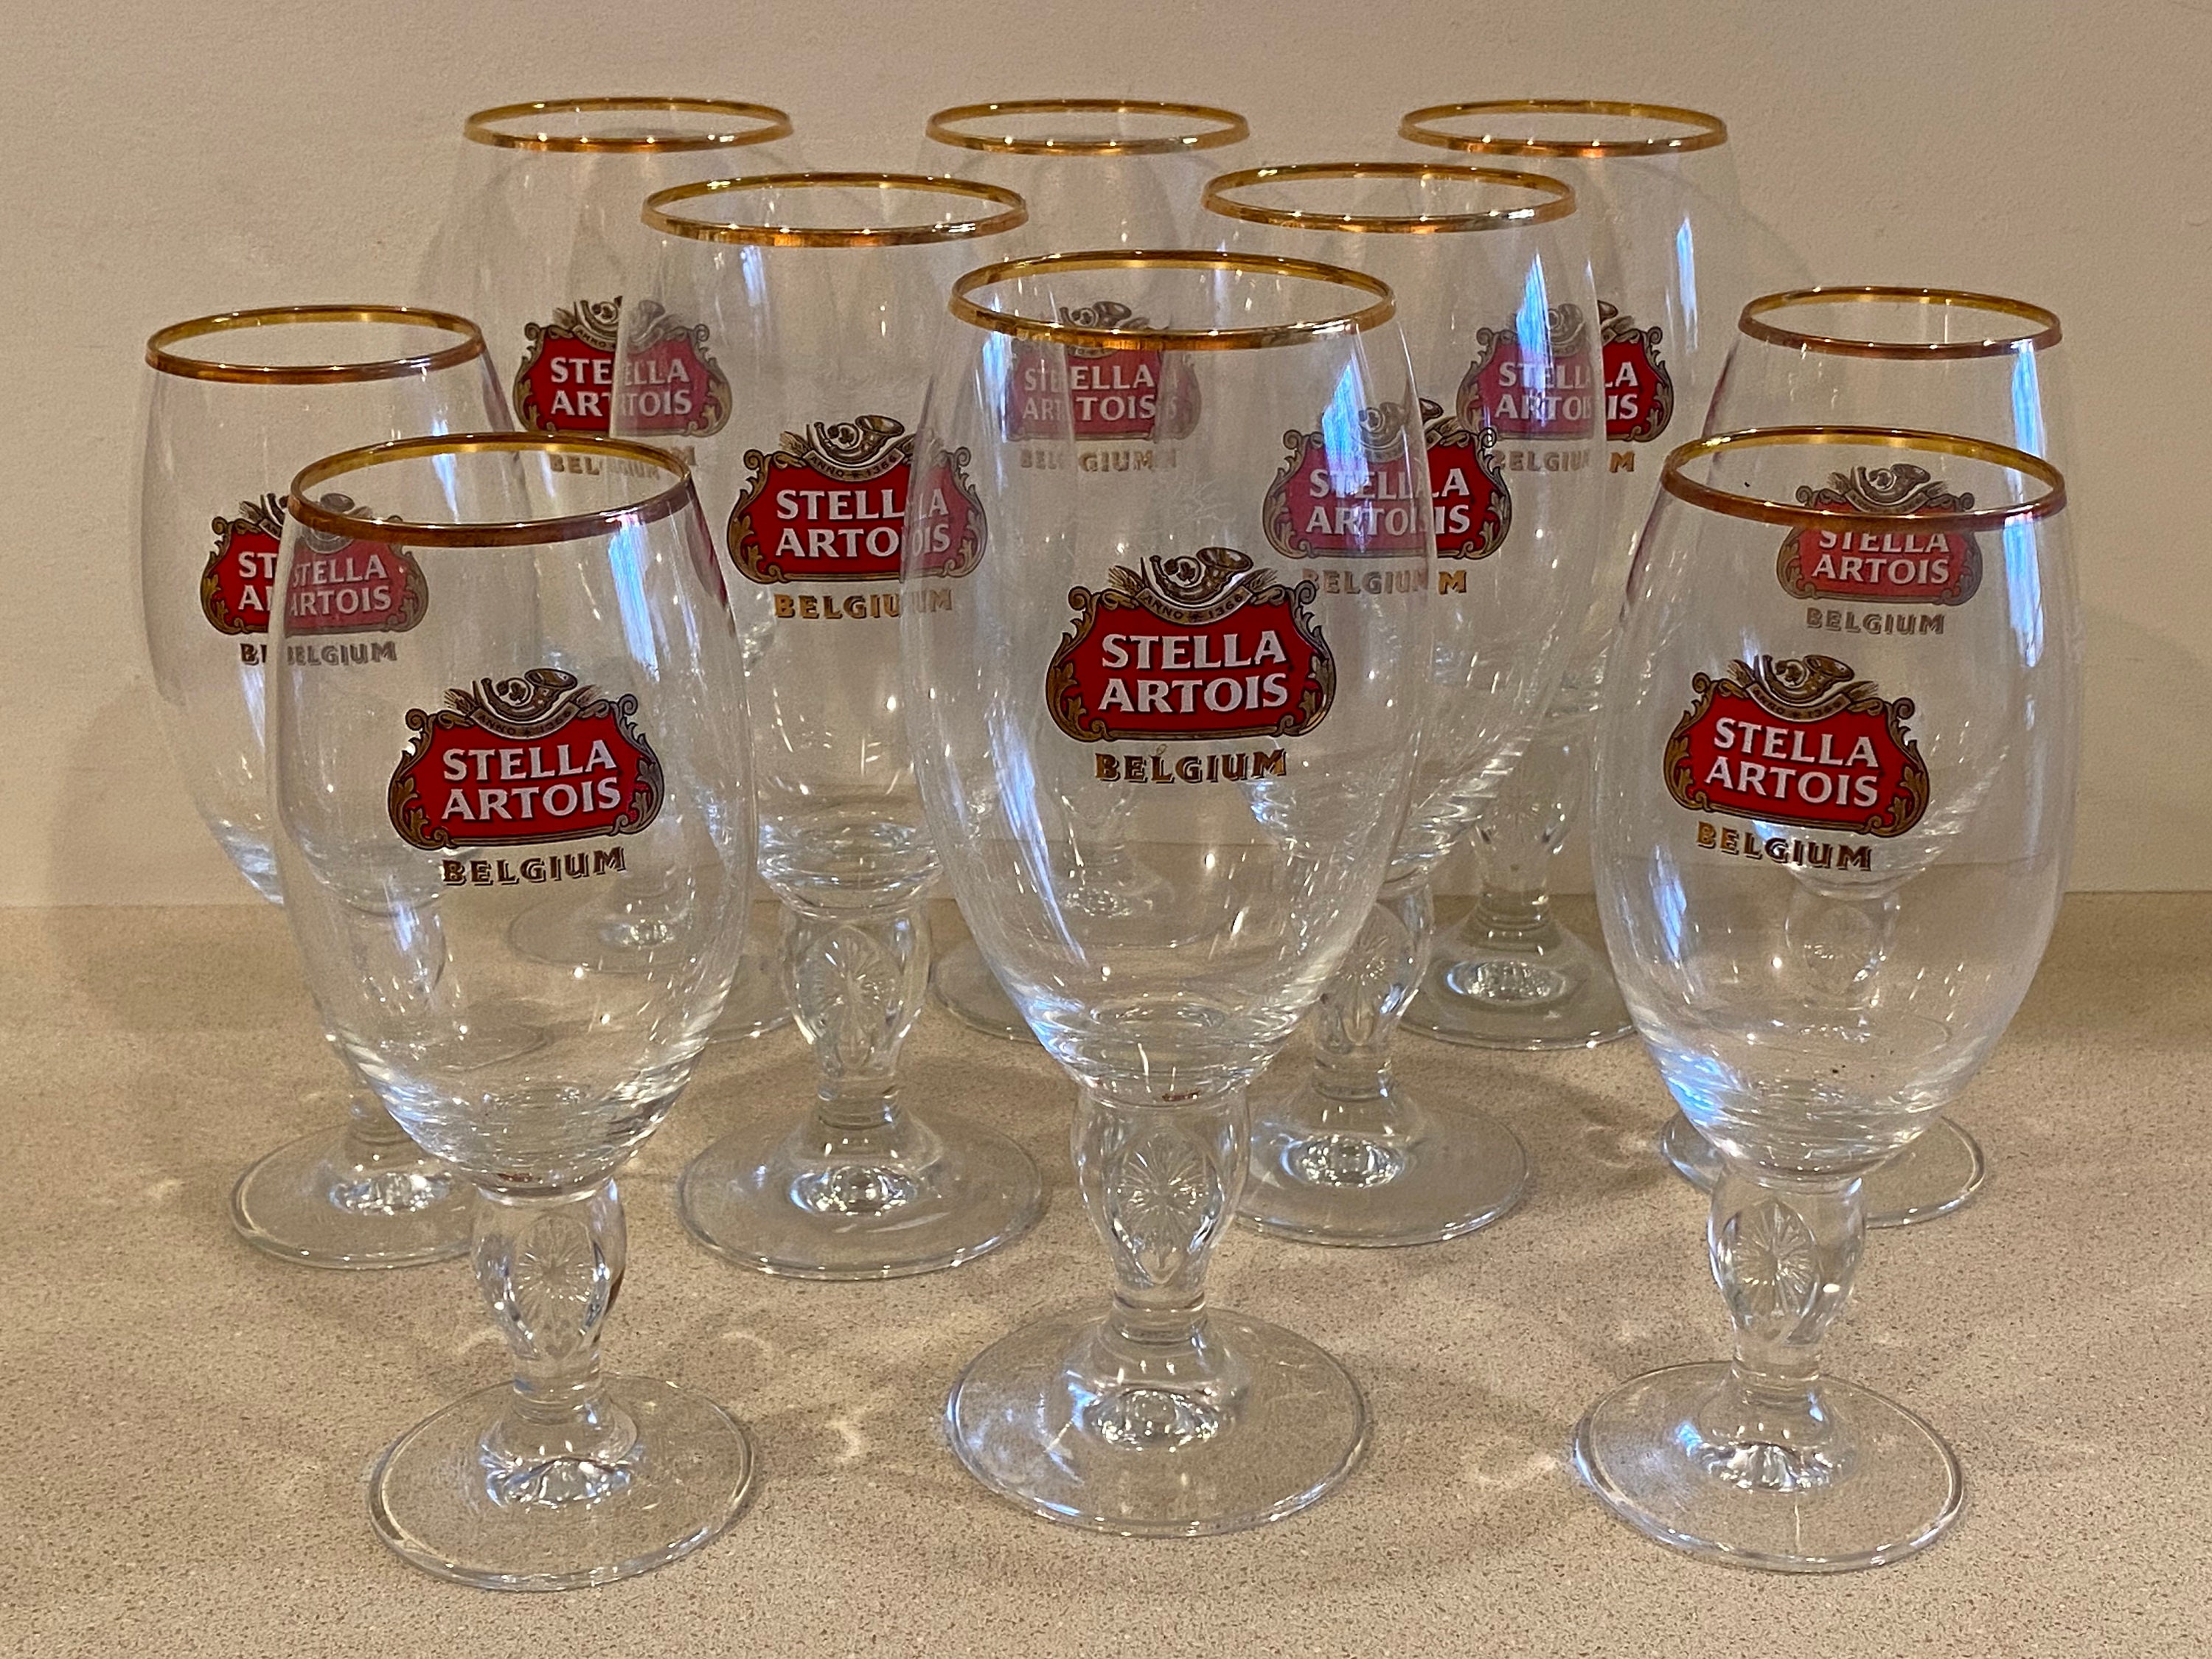 Stella Artois Beer Glass 